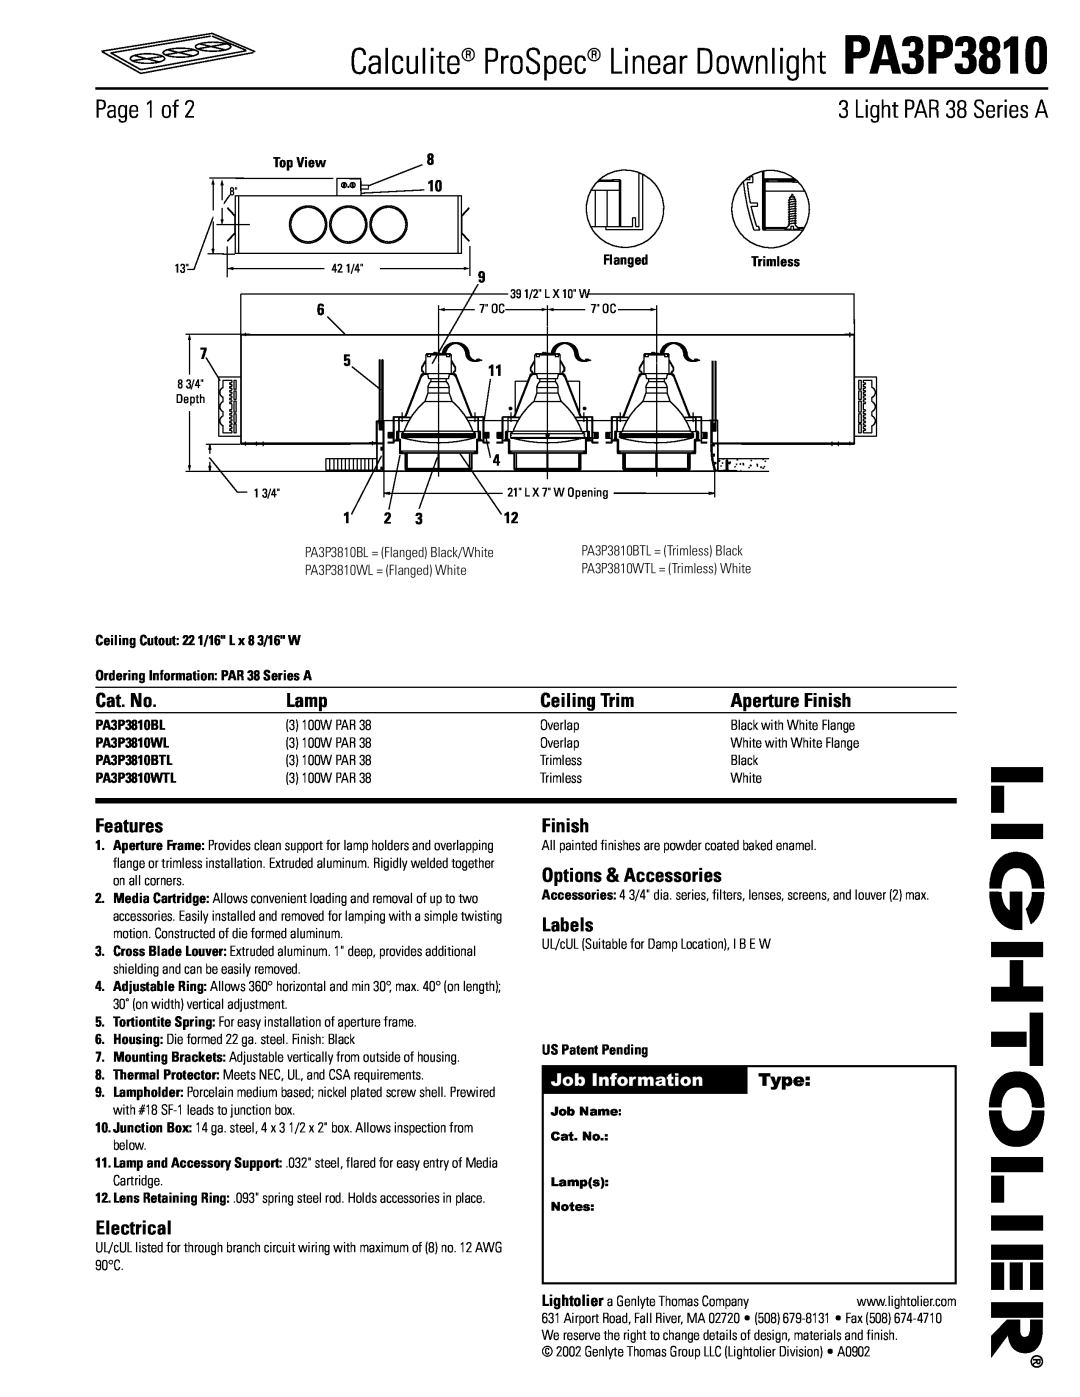 Lightolier manual Calculite ProSpec Linear Downlight PA3P3810, Page 1 of, Light PAR 38 Series A, Cat. No, Lamp, Finish 